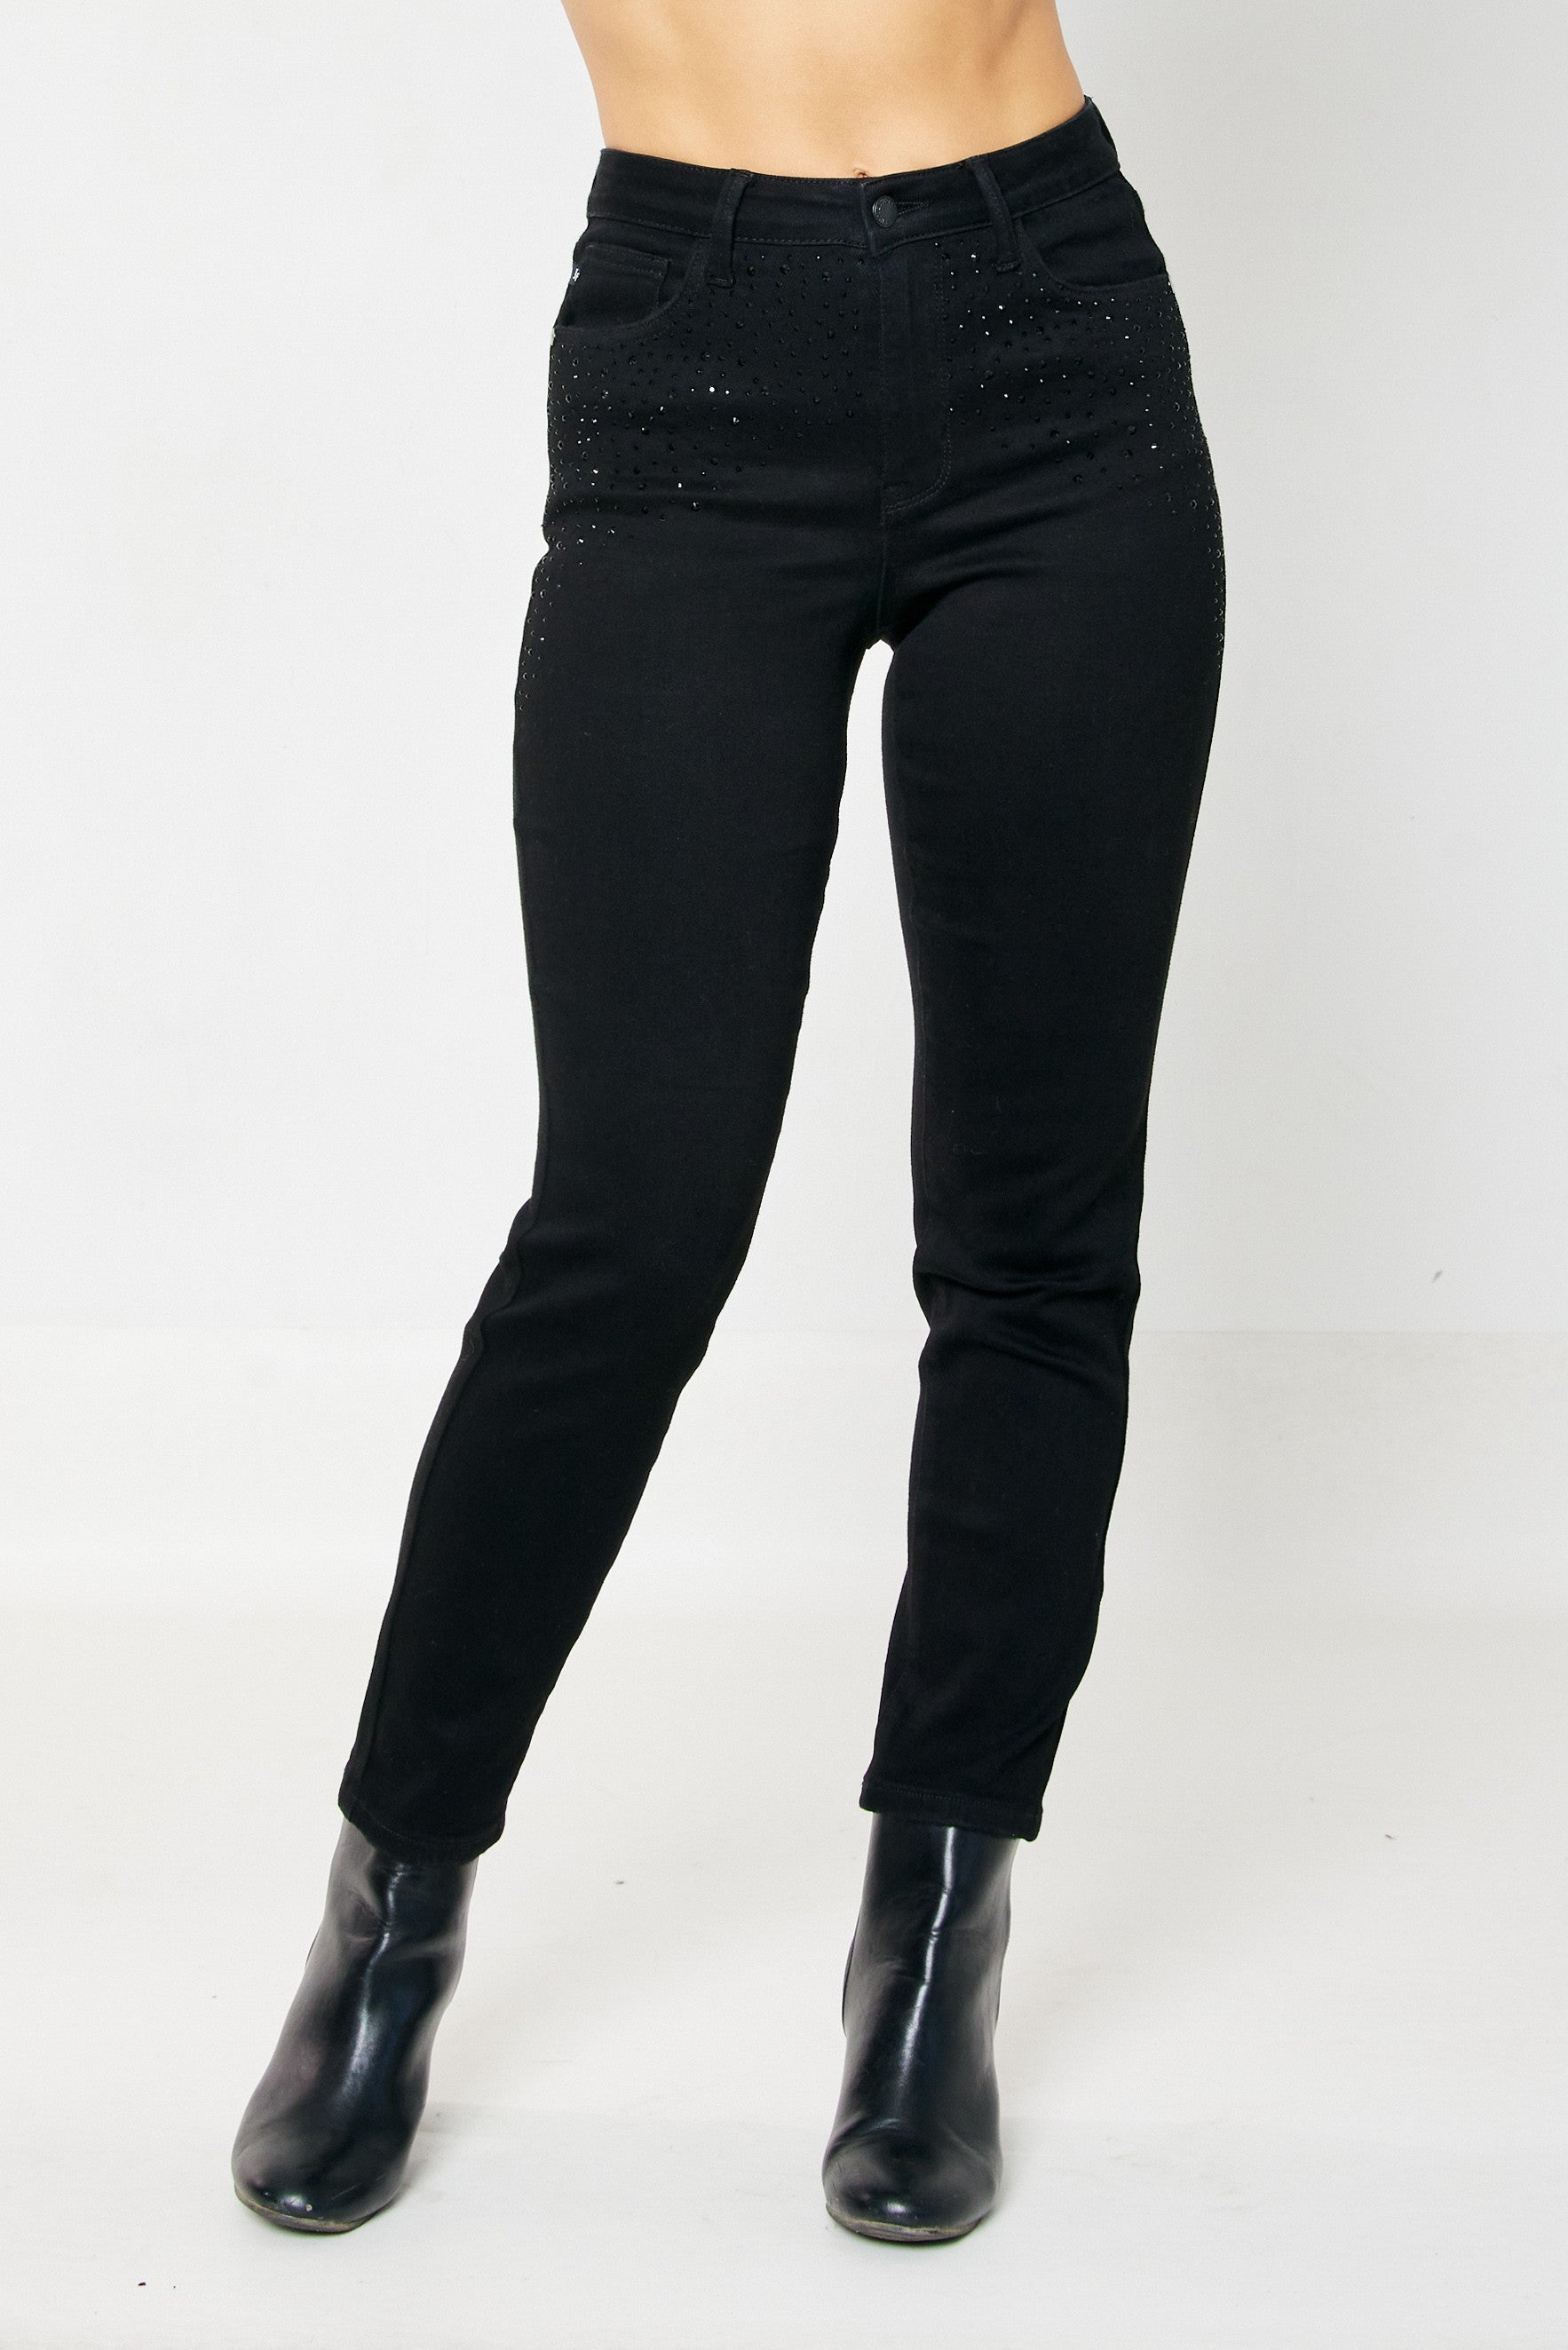 Judy Blue Reese Rhinestone Slim Fit Jeans in Black Ave Shops